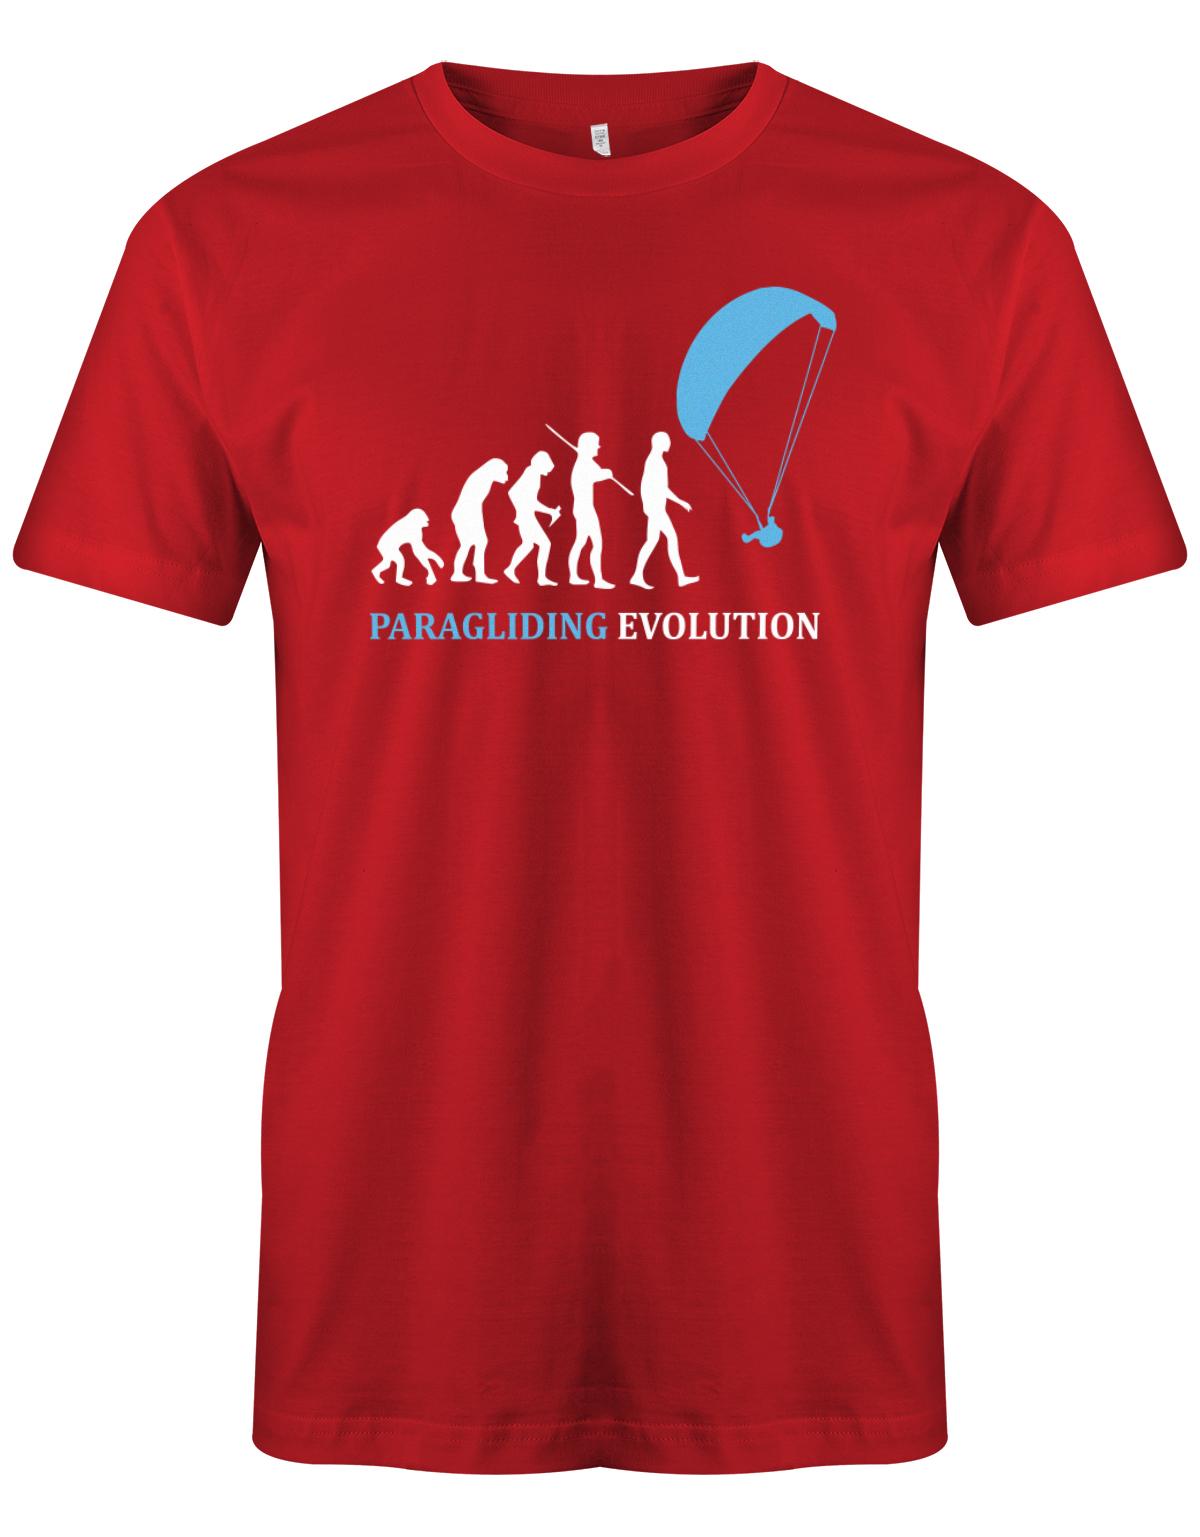 Paragliding-Evolution-herren-Shirt-Rot